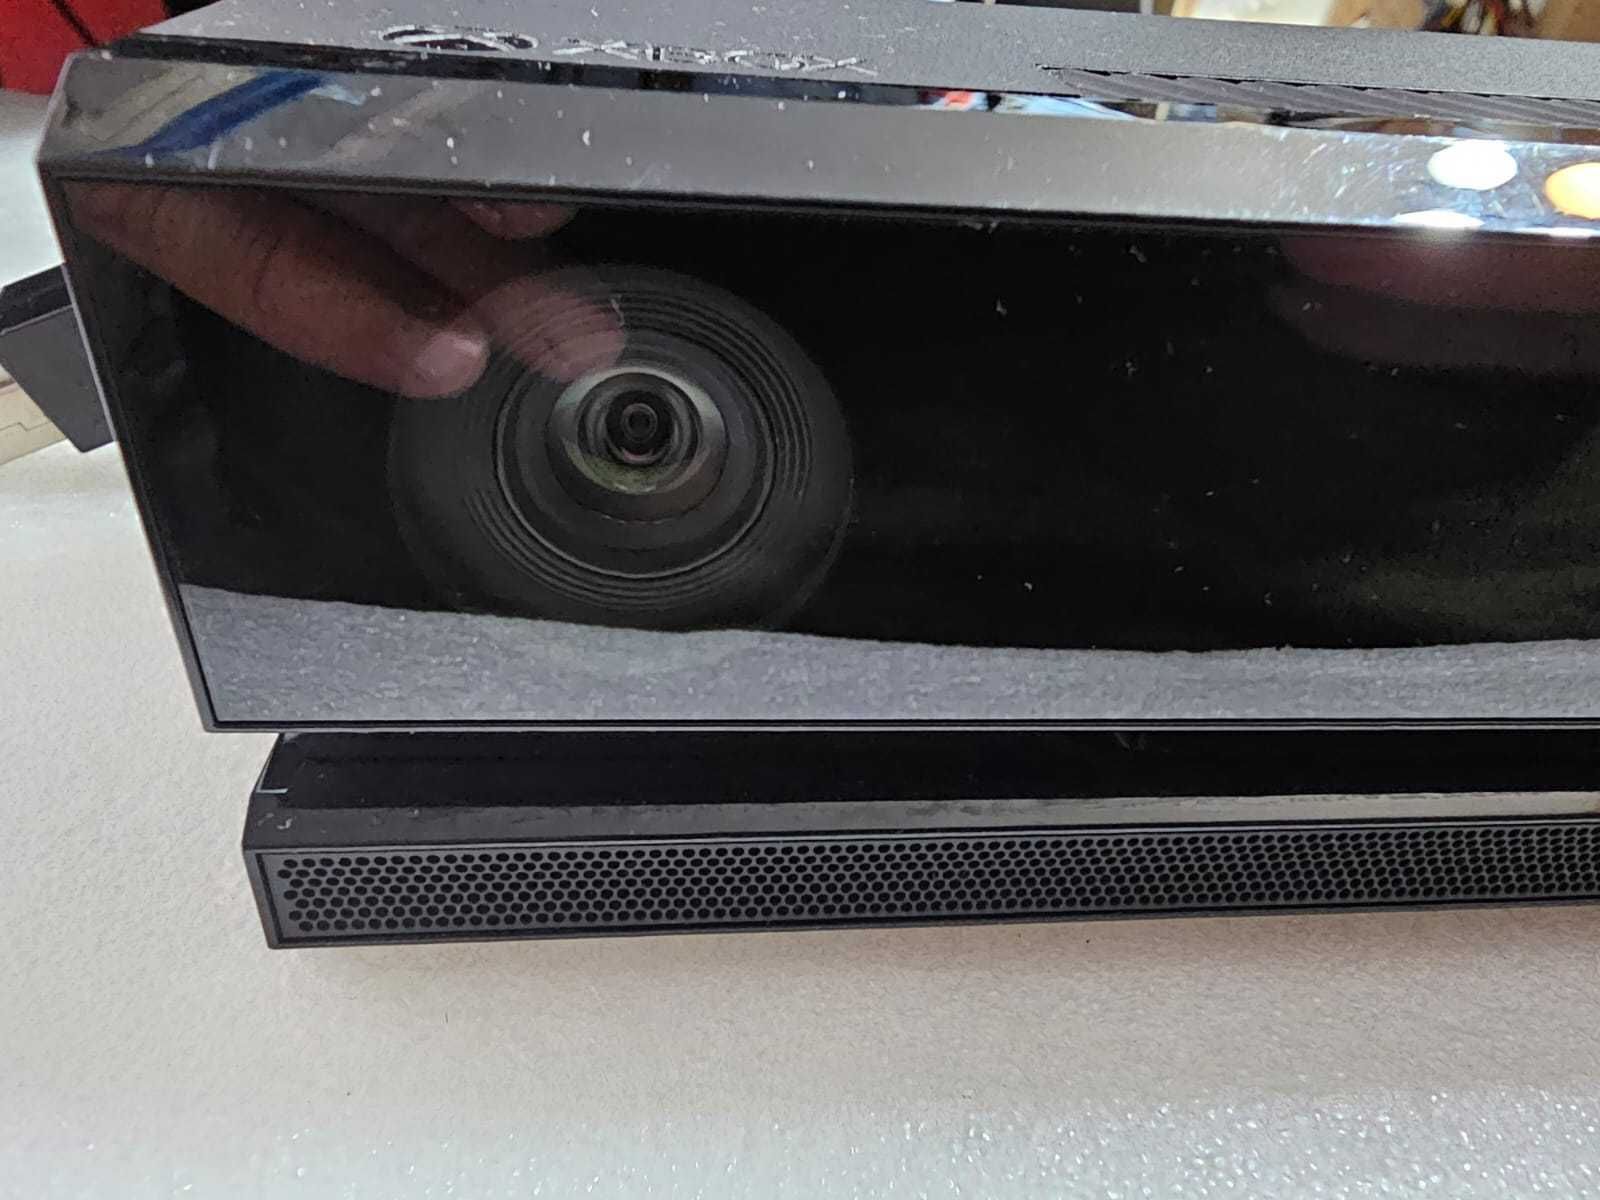 Sensor Microsoft Kinect Xbox One model 1520, Motion Sensor Black